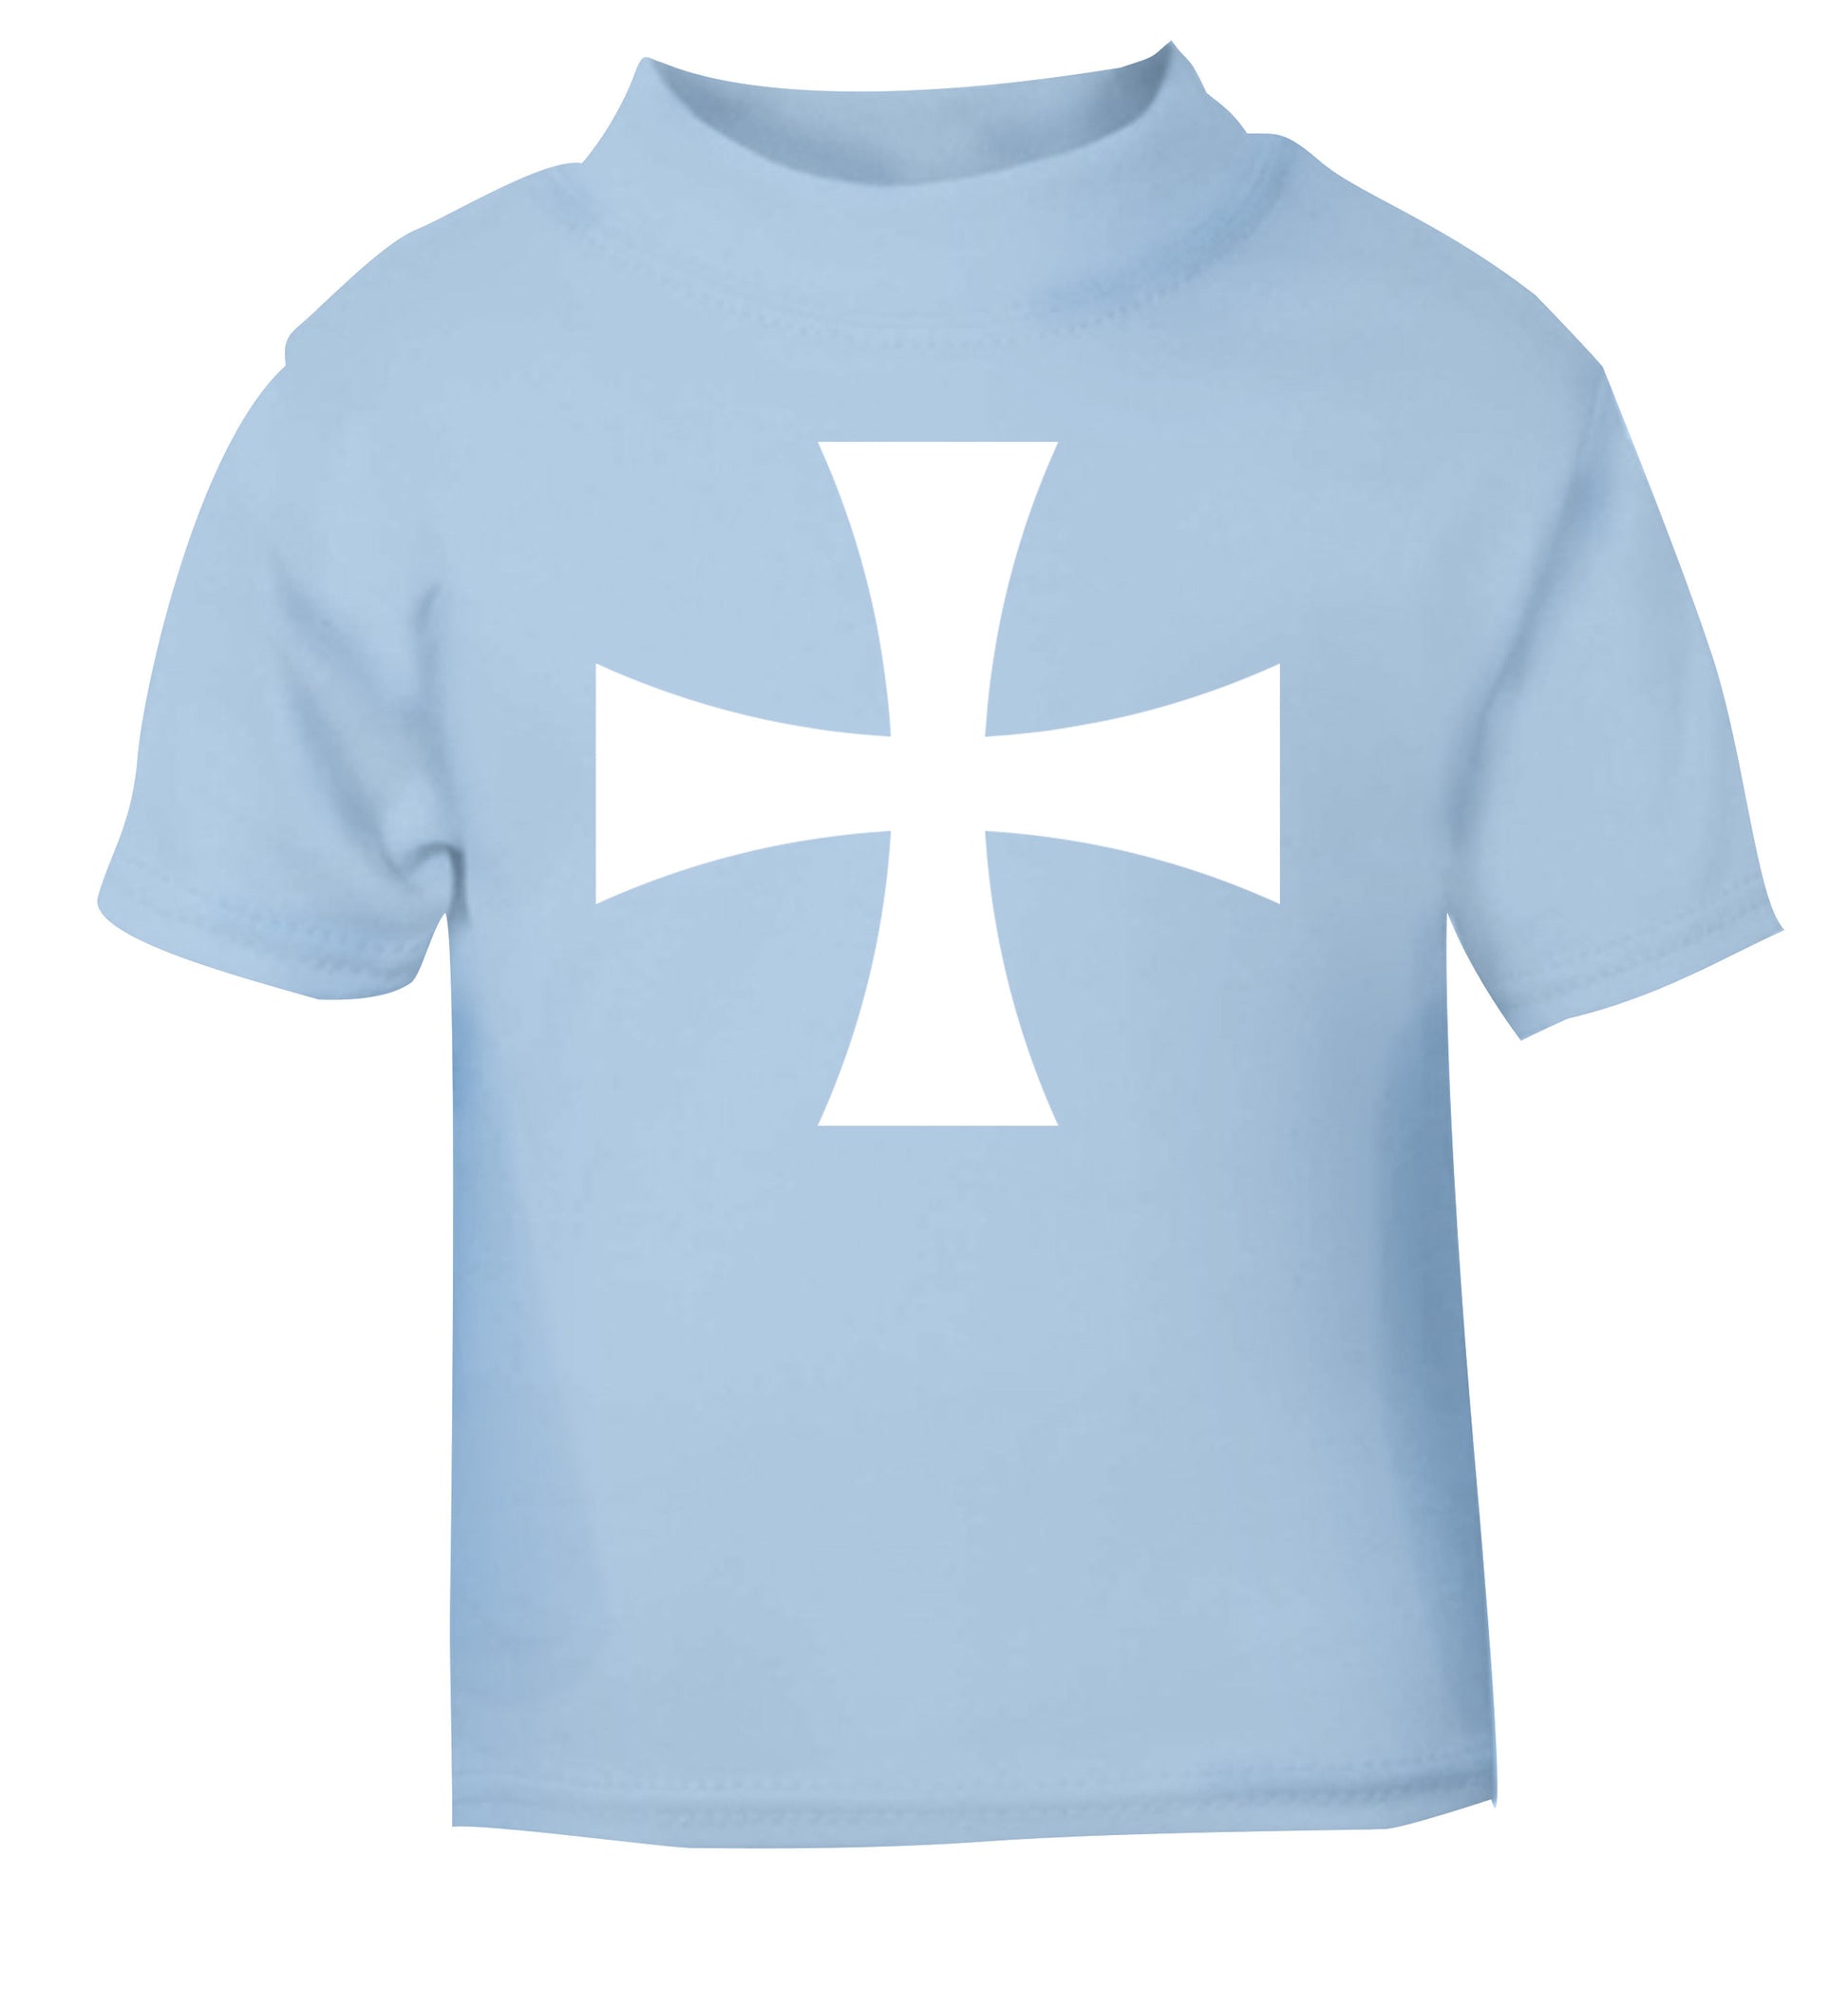 Knights Templar cross light blue Baby Toddler Tshirt 2 Years